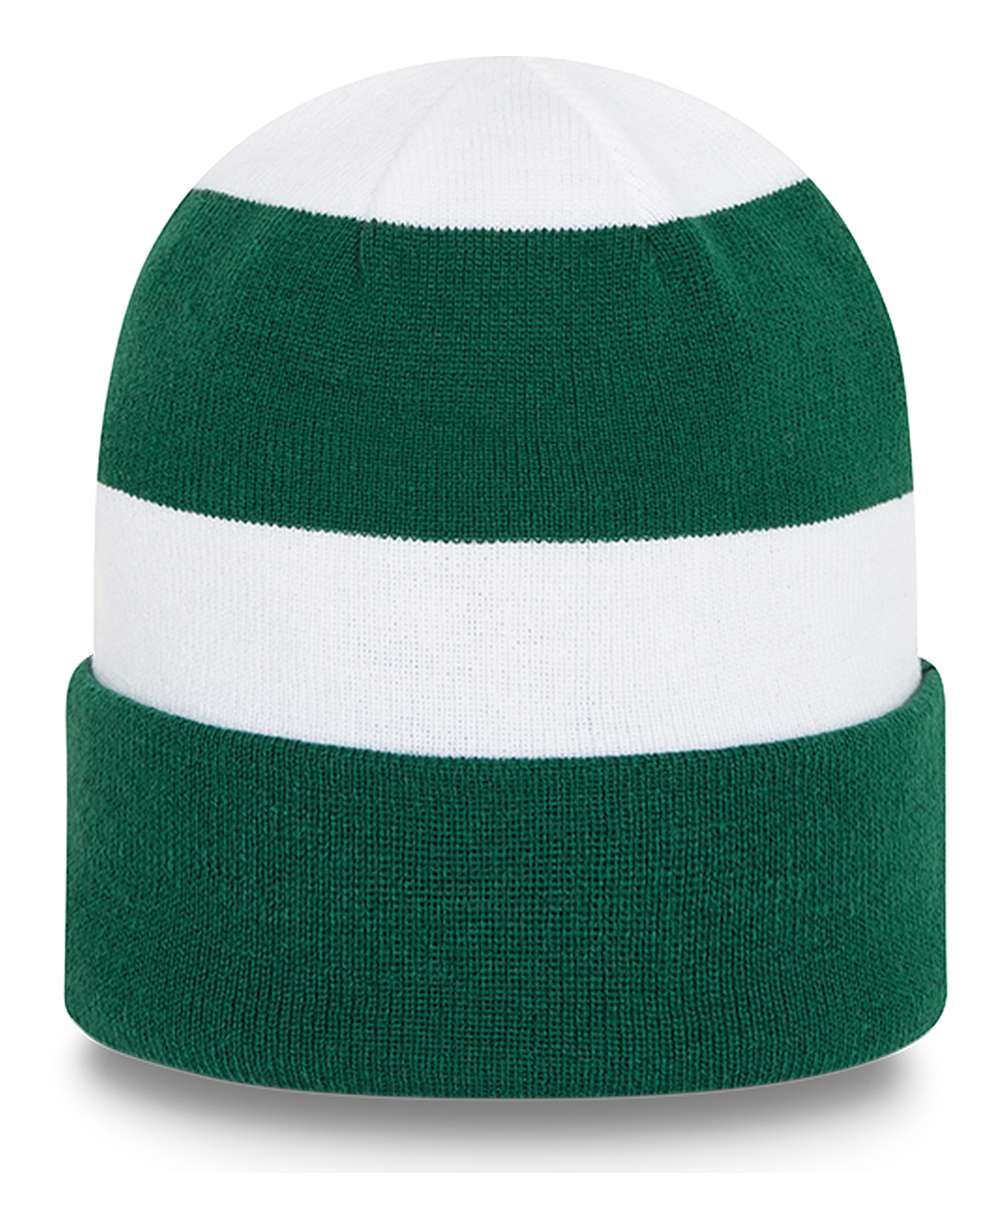 New Era - Football Association of Ireland Stripe Cuff Knit Beanie - Grün